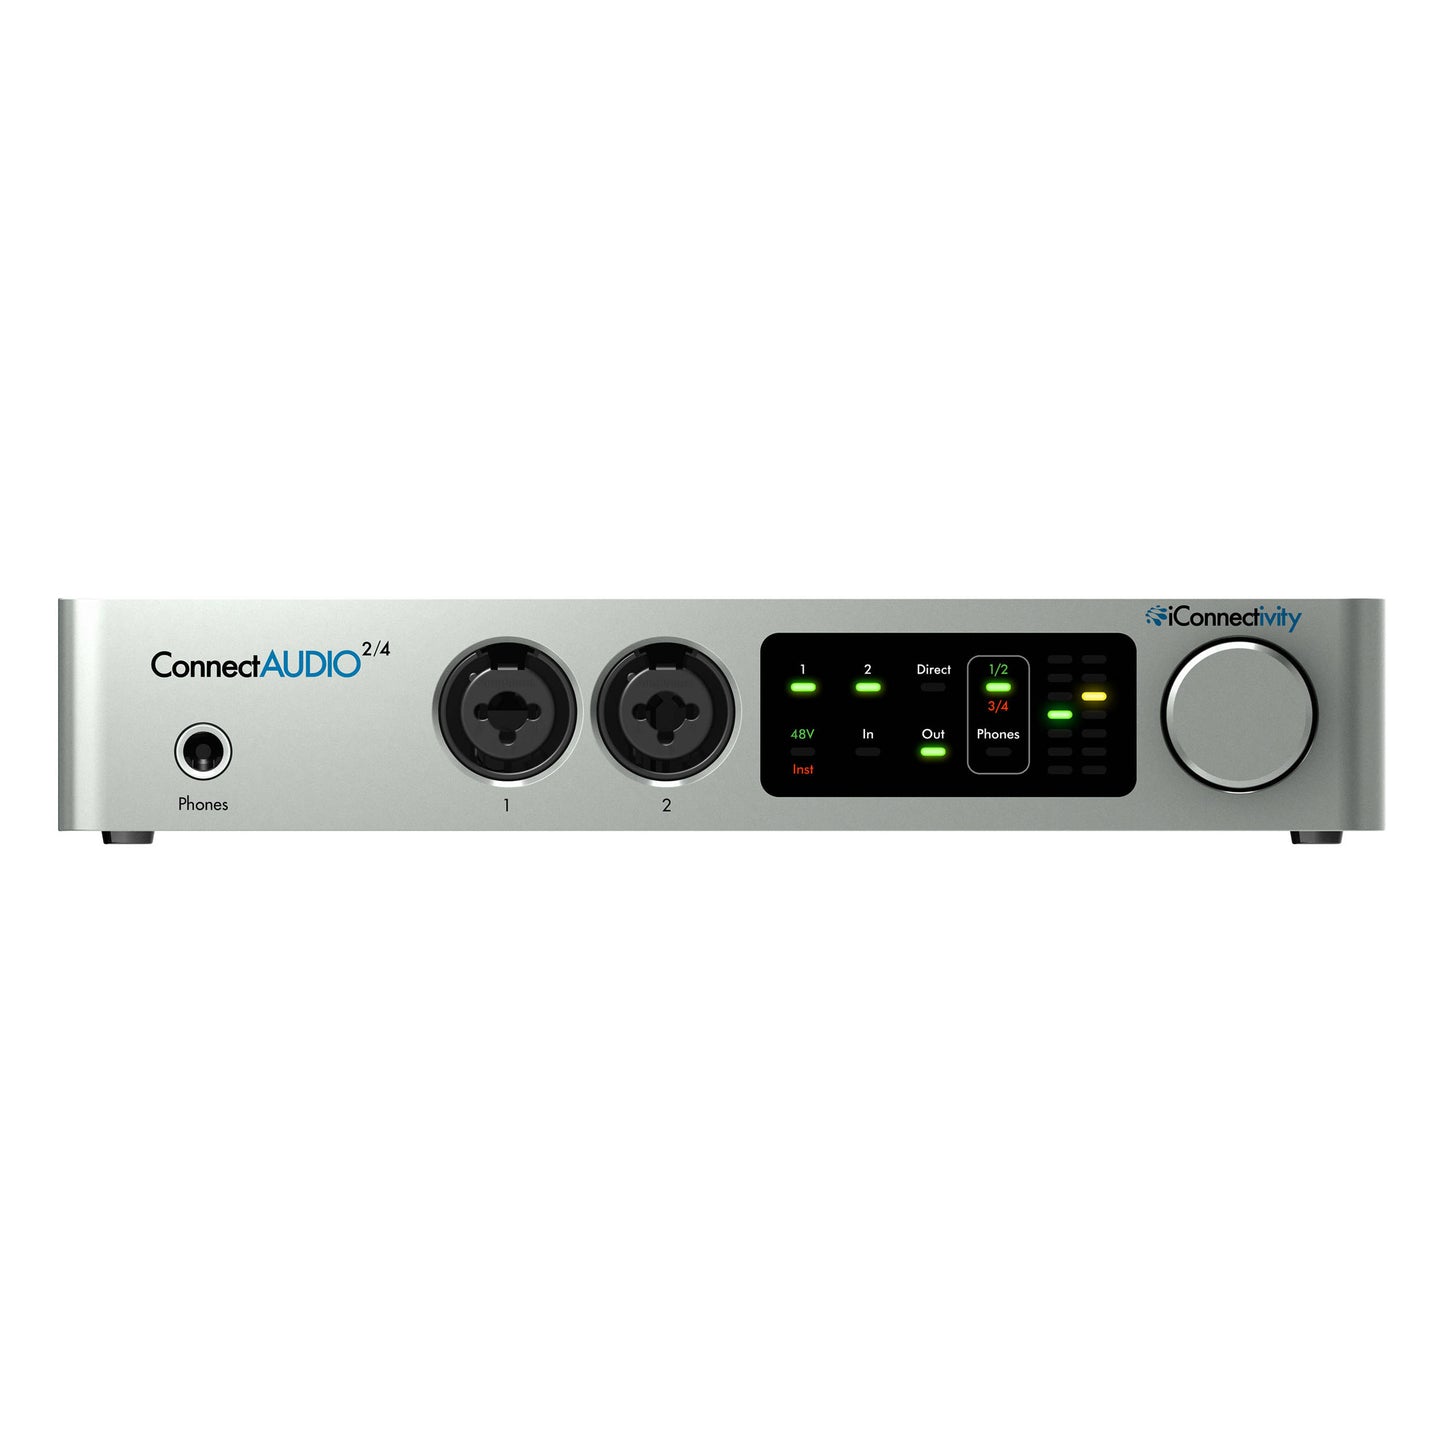 iConnectivity ConnectAudio2/4 - USB Audio and MIDI Interface